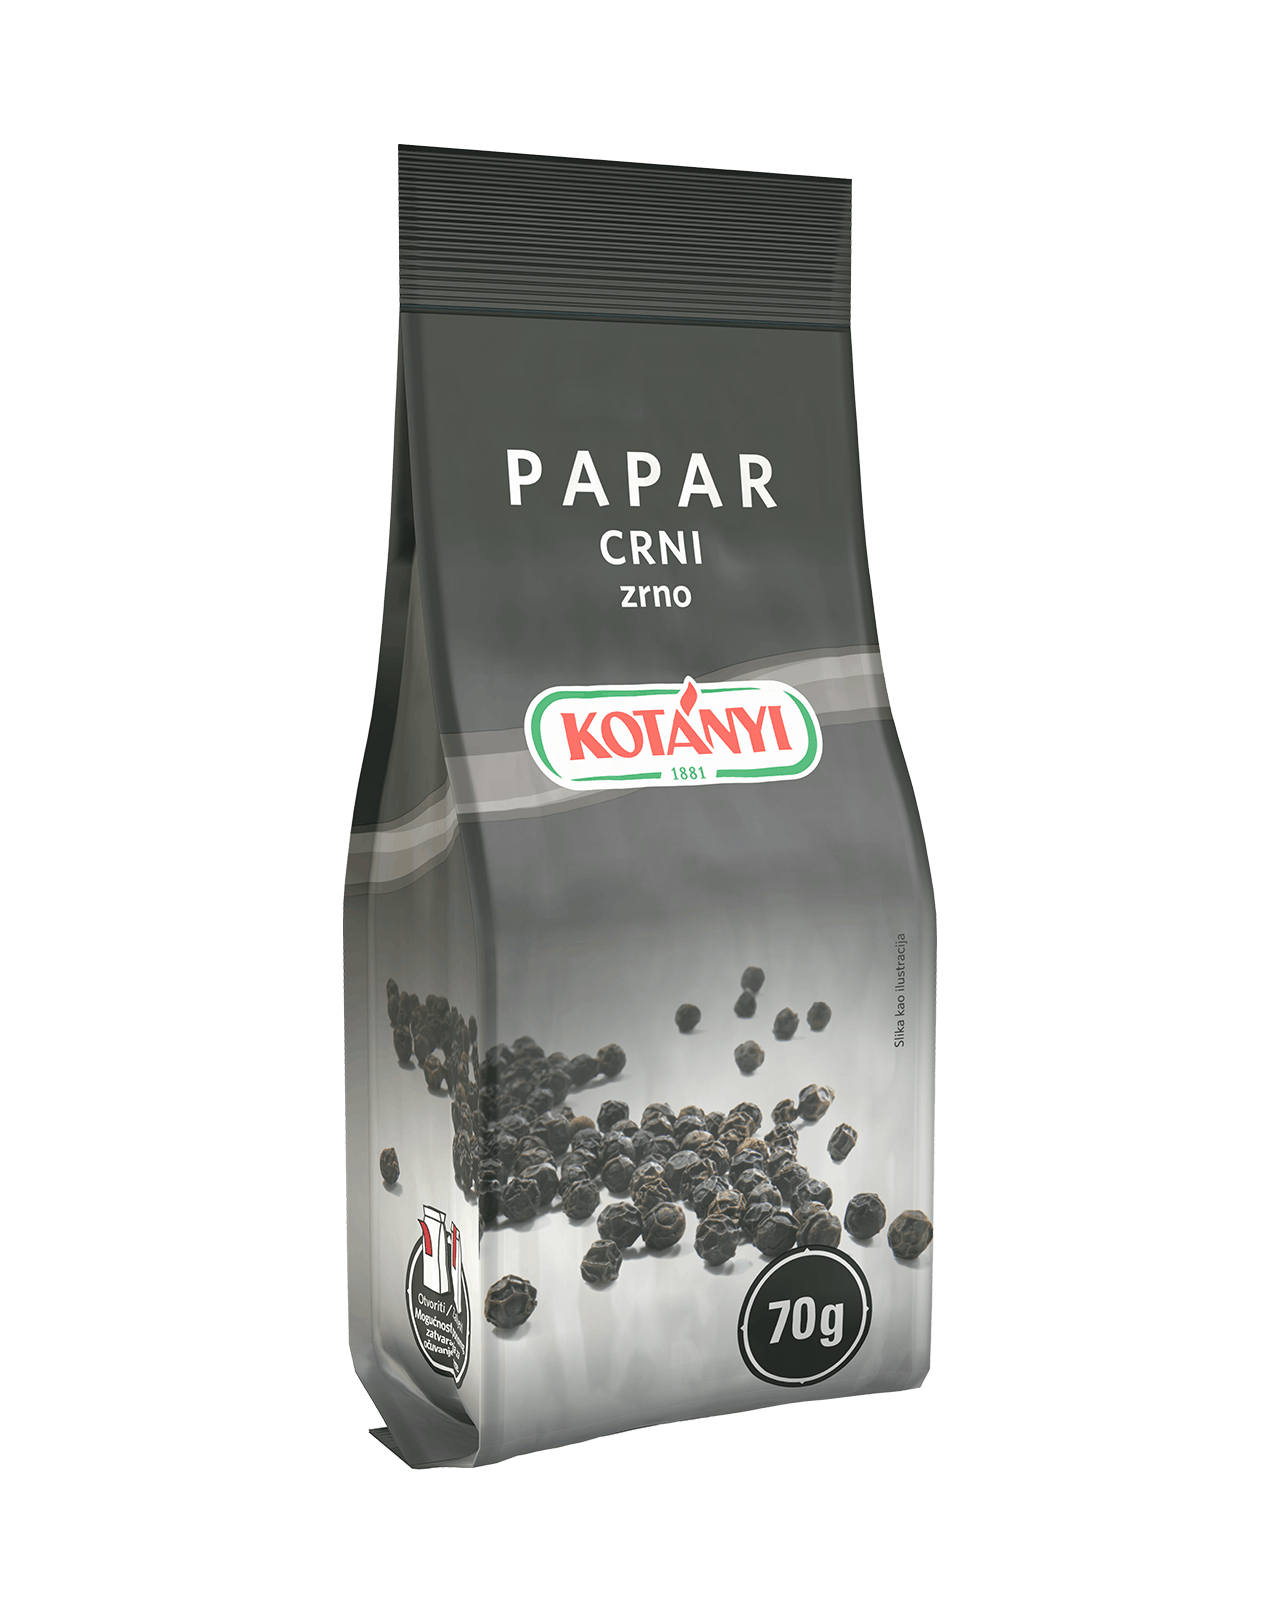 096308 Kotanyi Papar Crni Zrno B2c Stock Bag